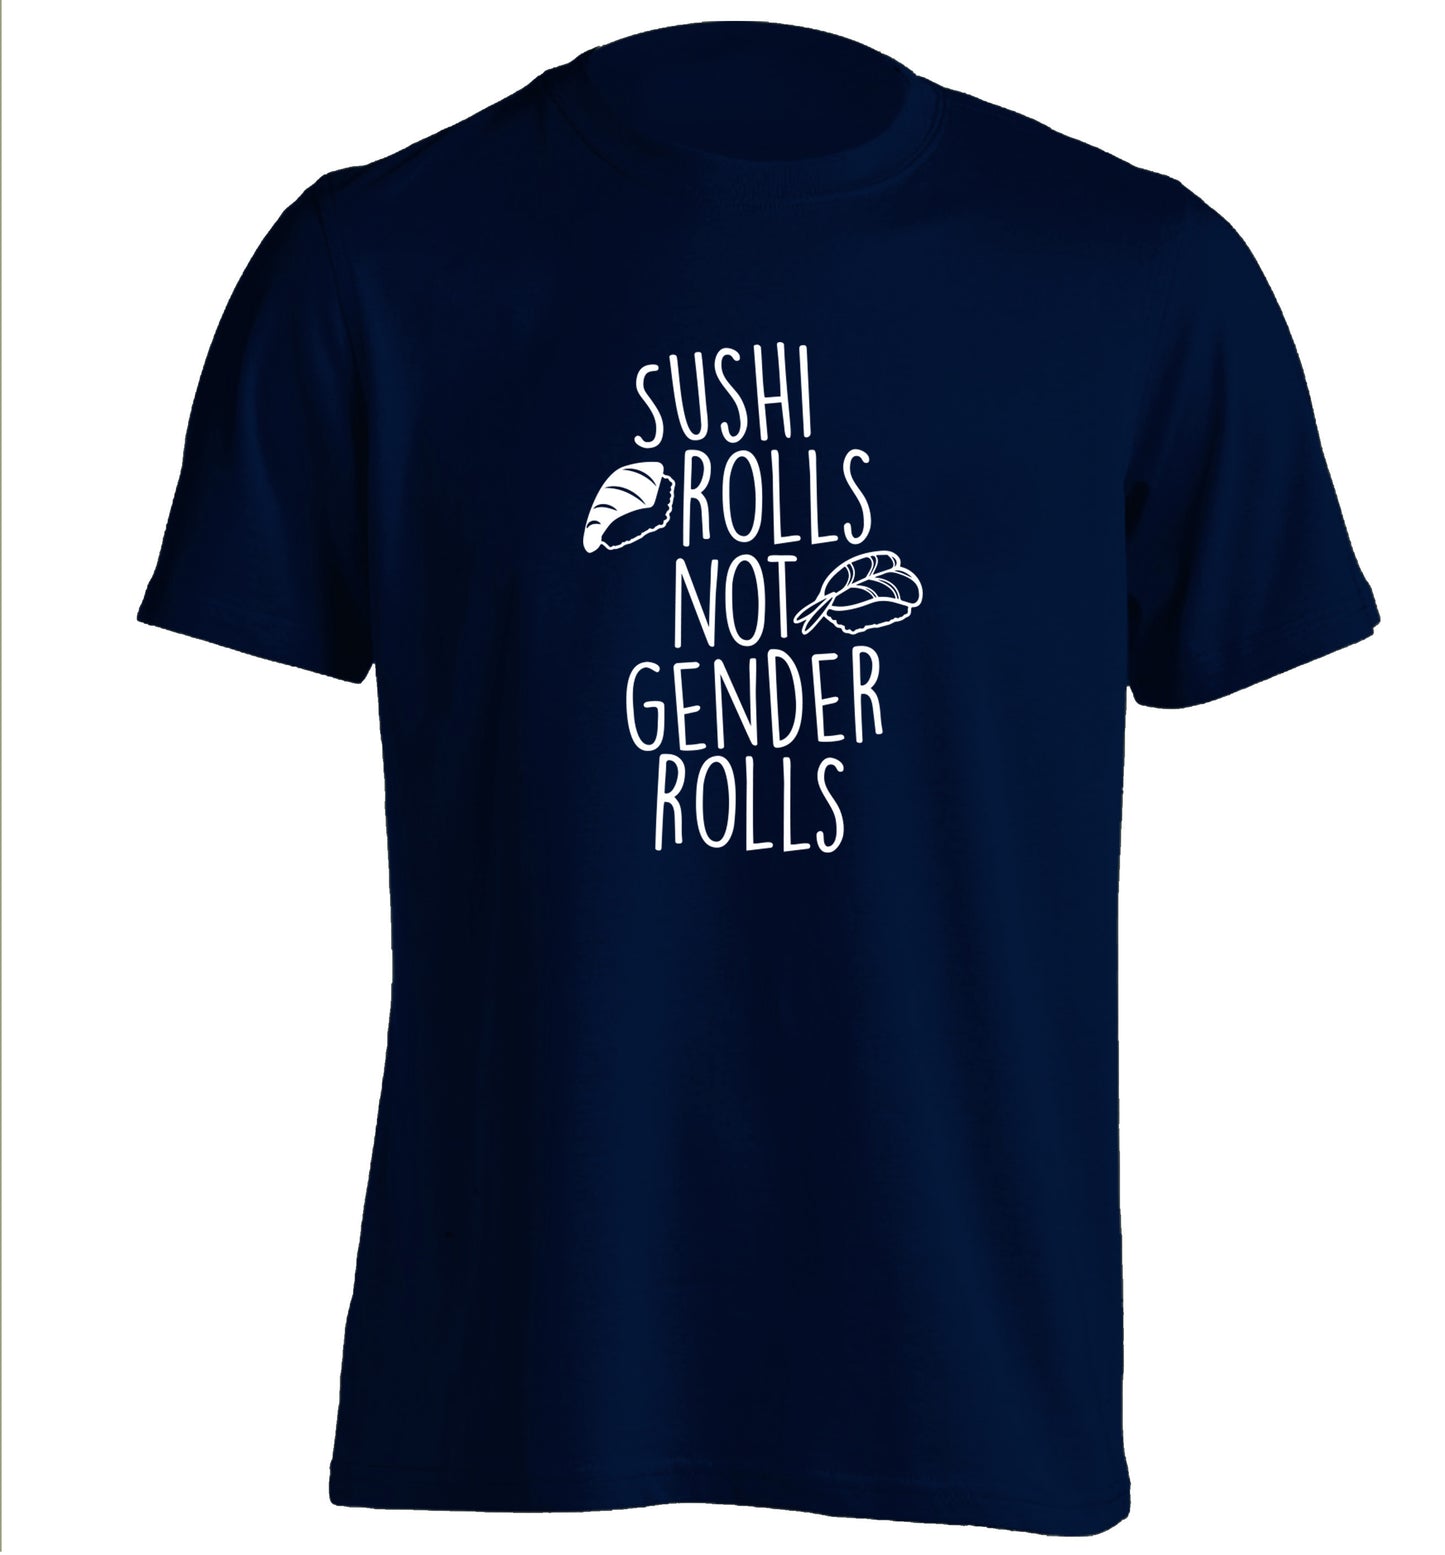 Sushi rolls not gender rolls adults unisex navy Tshirt 2XL